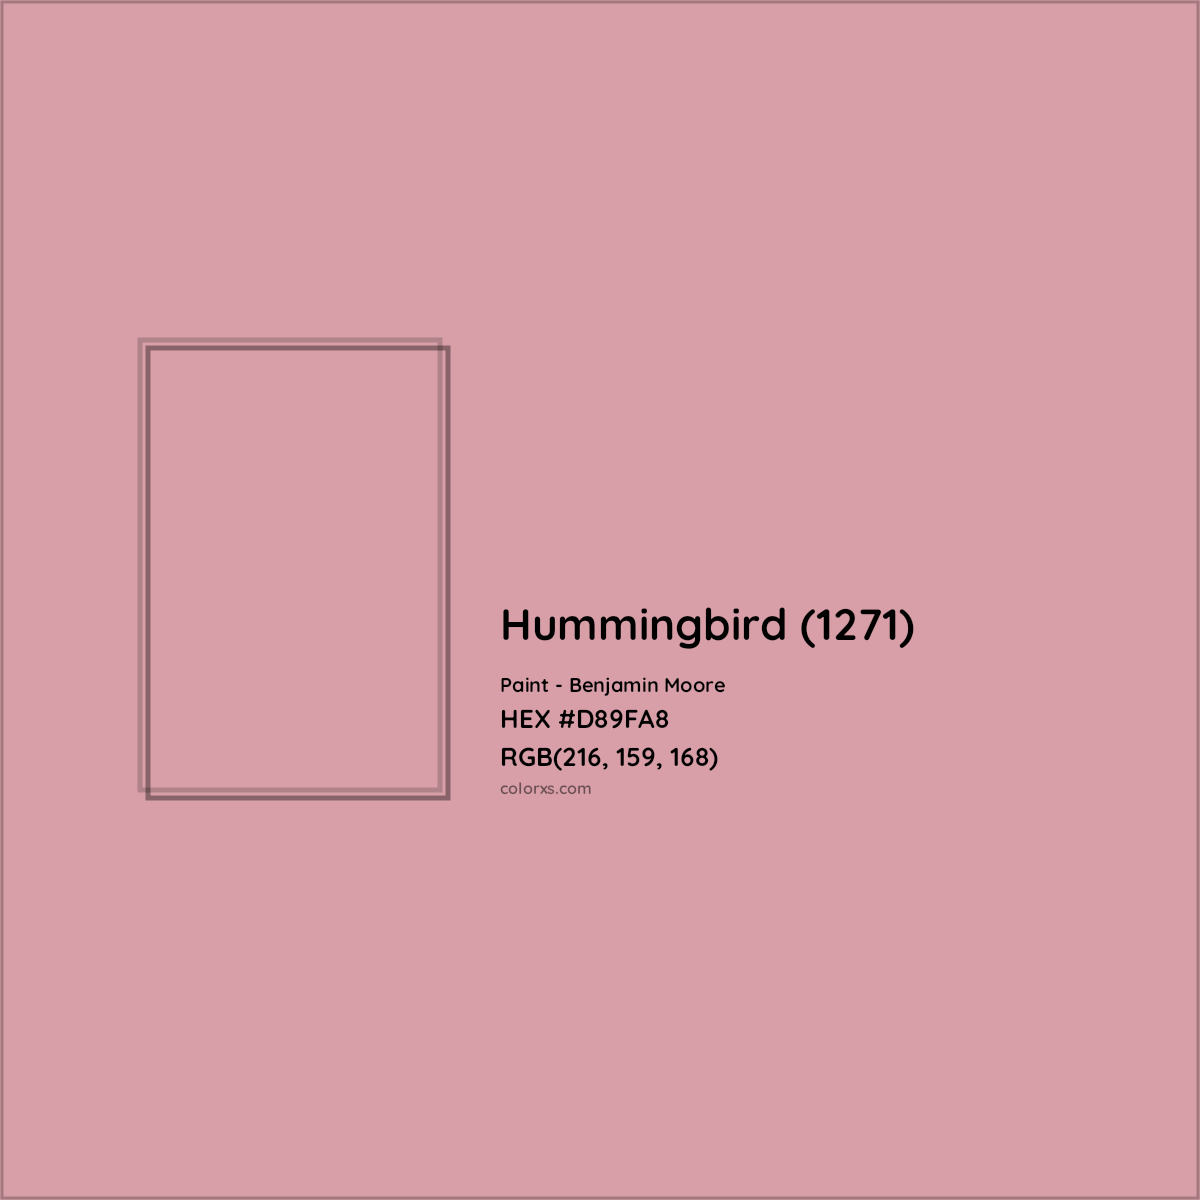 HEX #D89FA8 Hummingbird (1271) Paint Benjamin Moore - Color Code